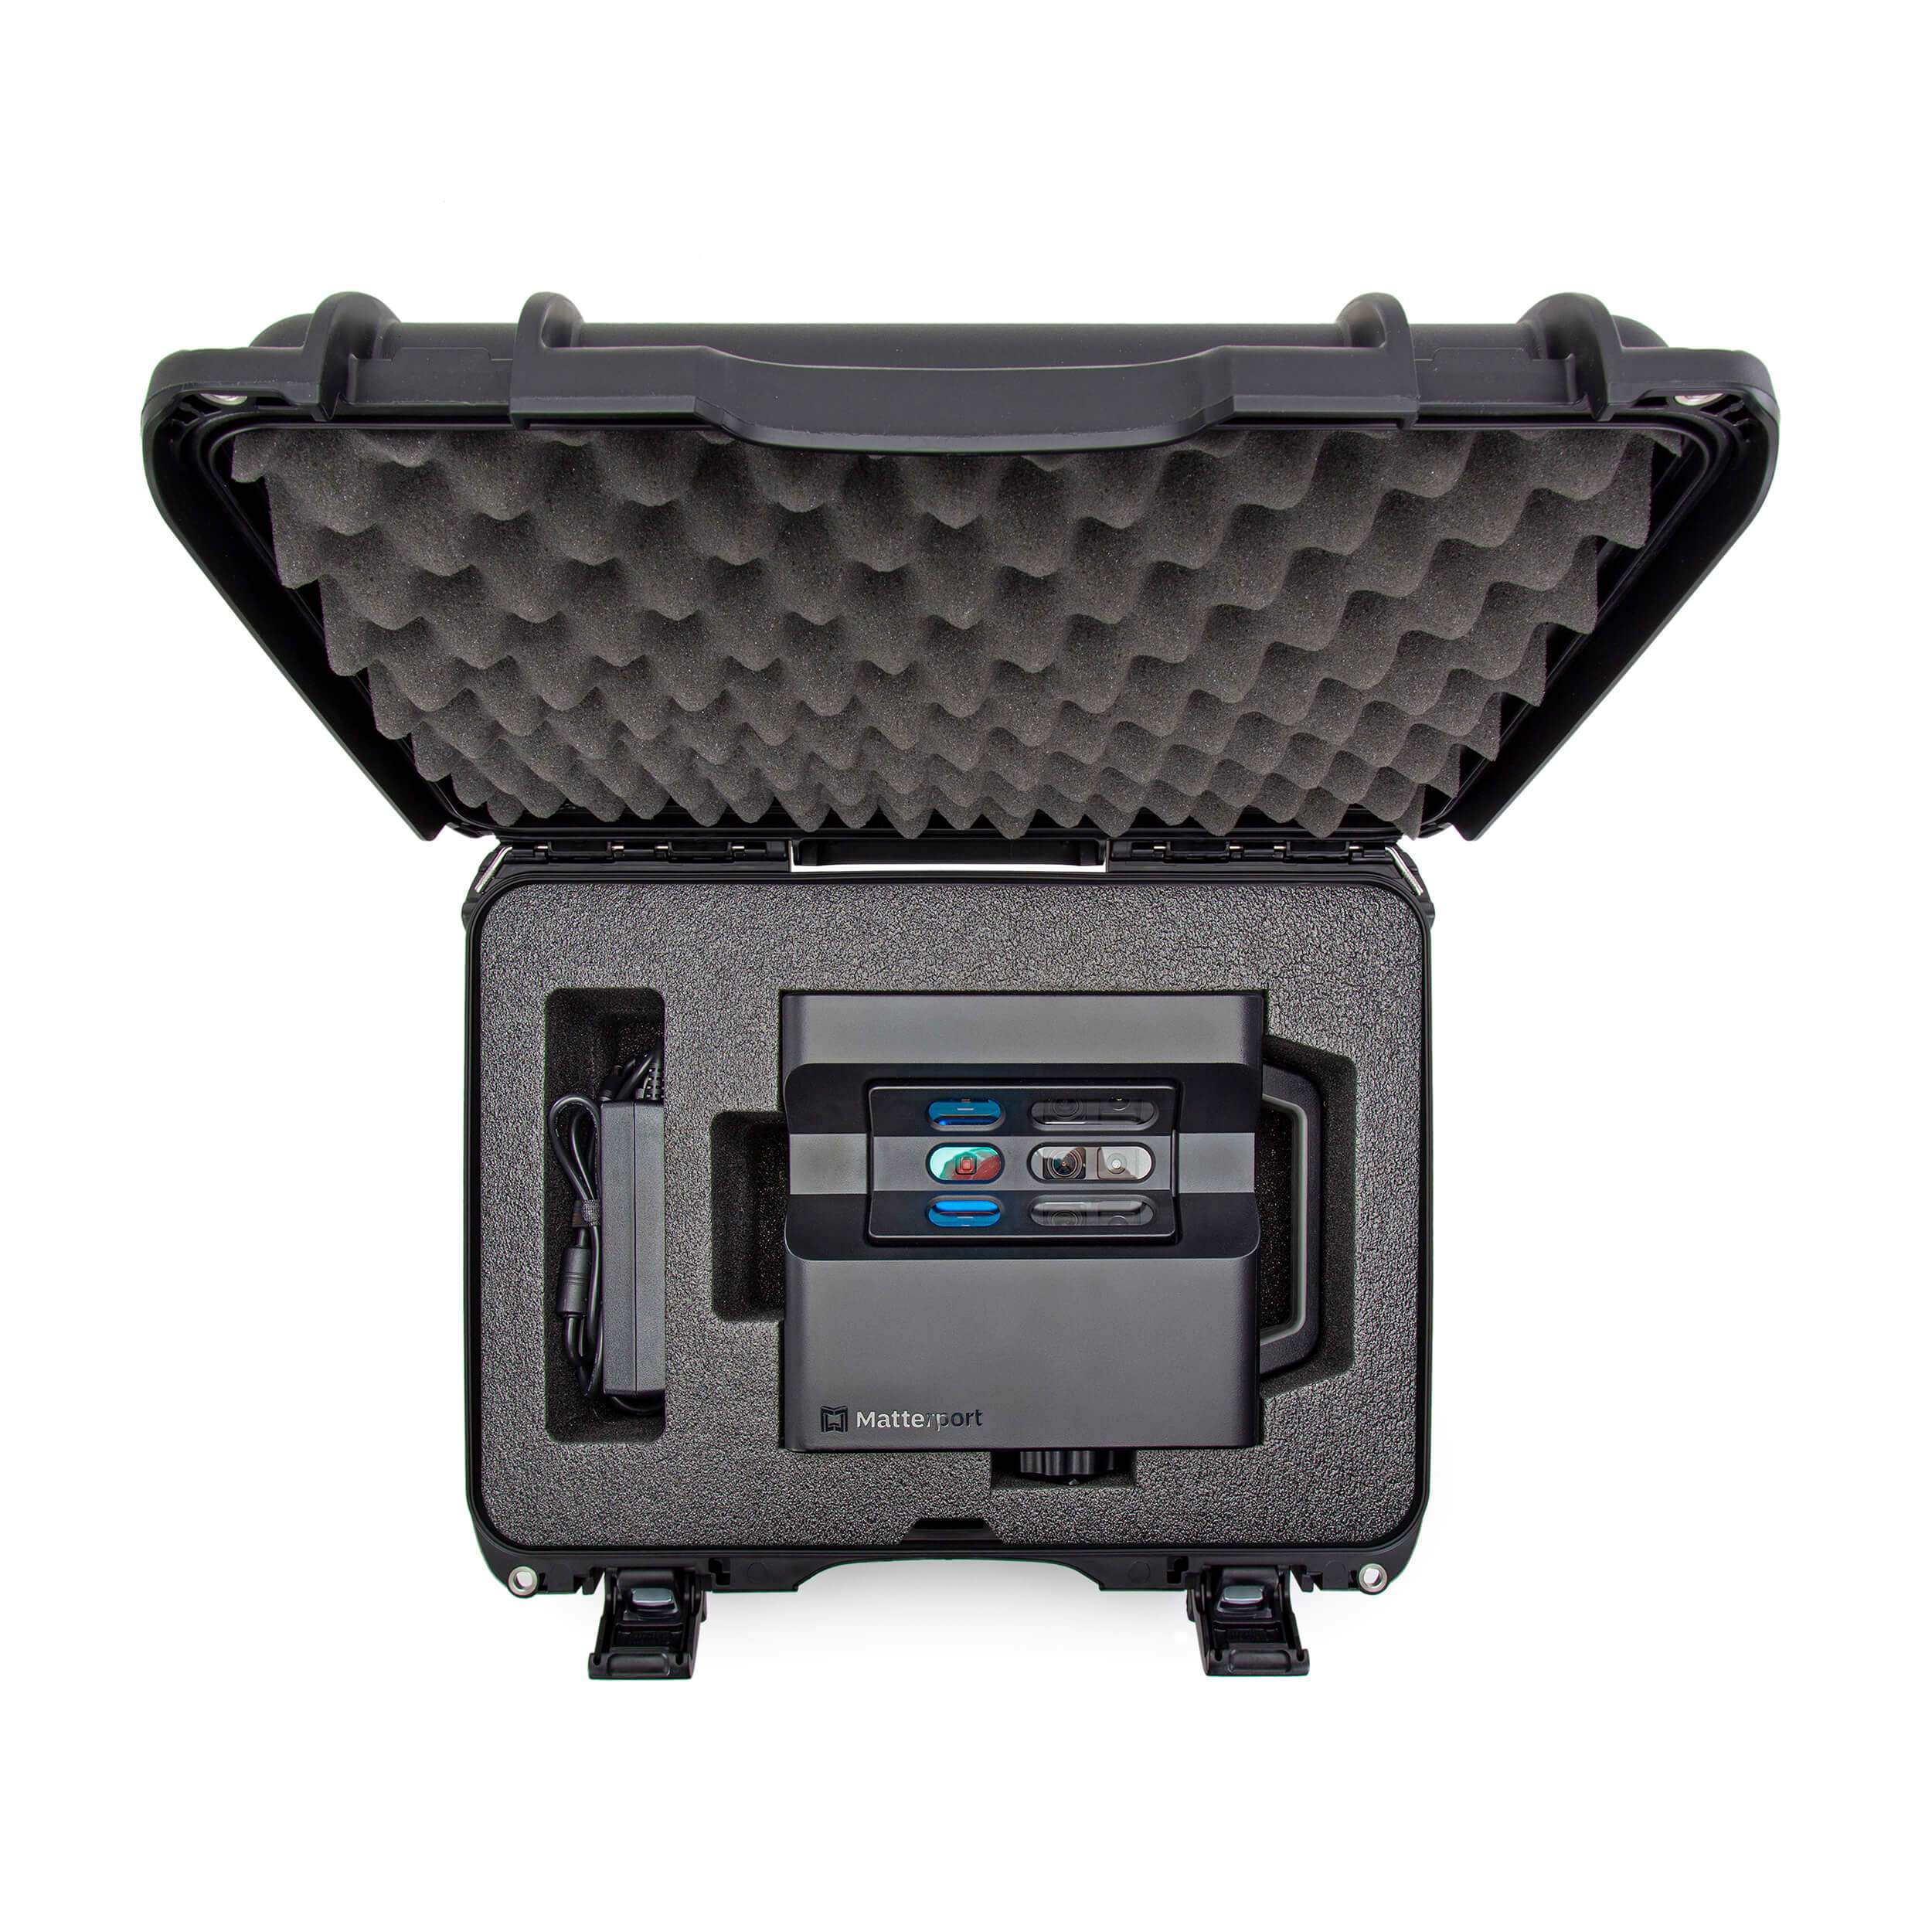 NANUK 925 für die Matterport Pro1 oder Pro2 3D-Kamera-Kamera koffer-Schwarz-NANUK